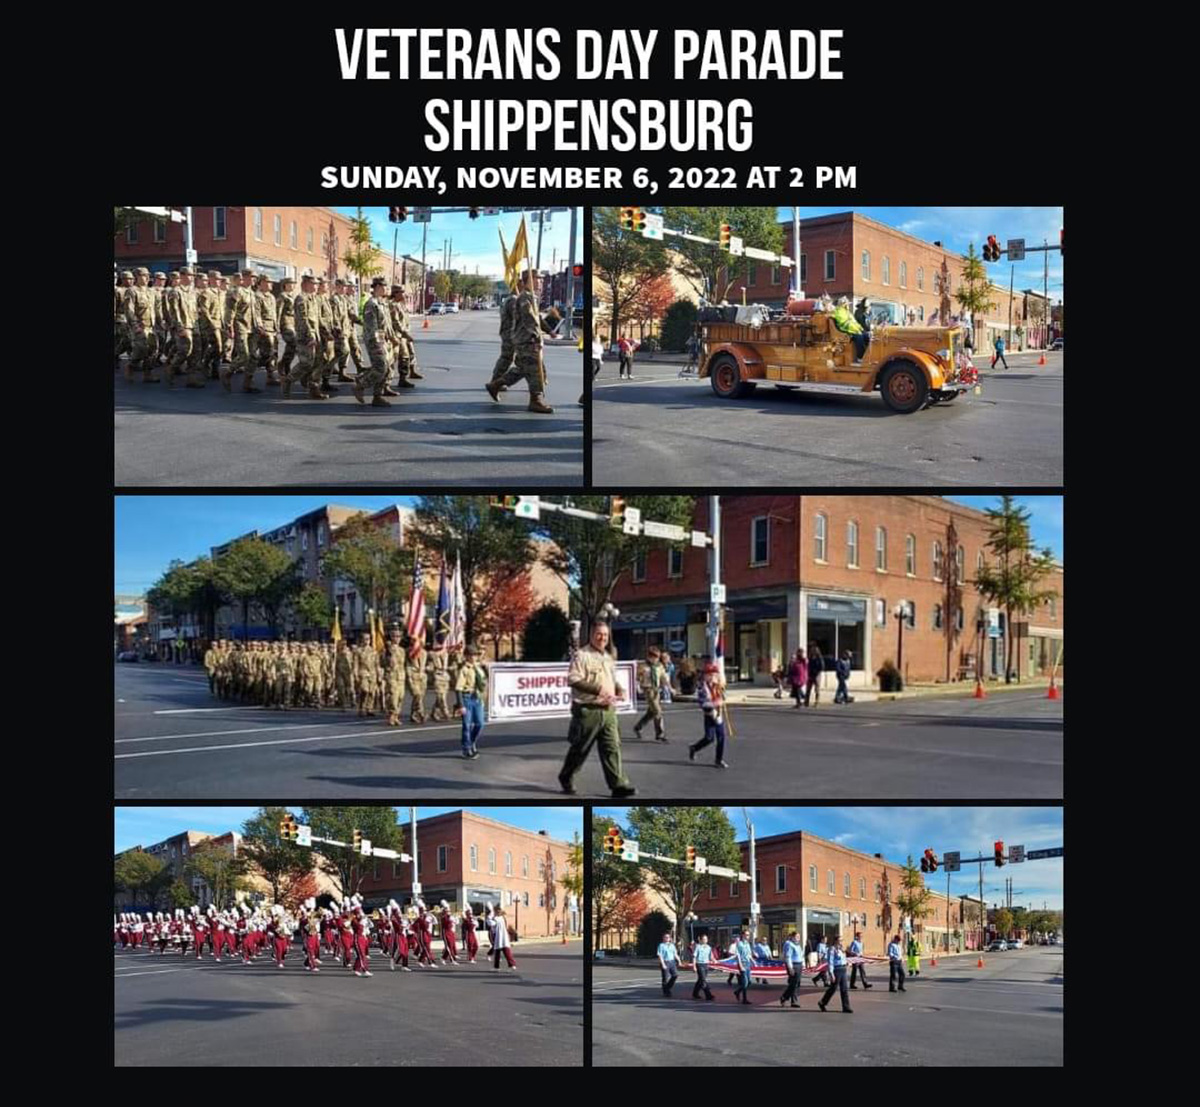 Shippensburg Veterans Day Parade